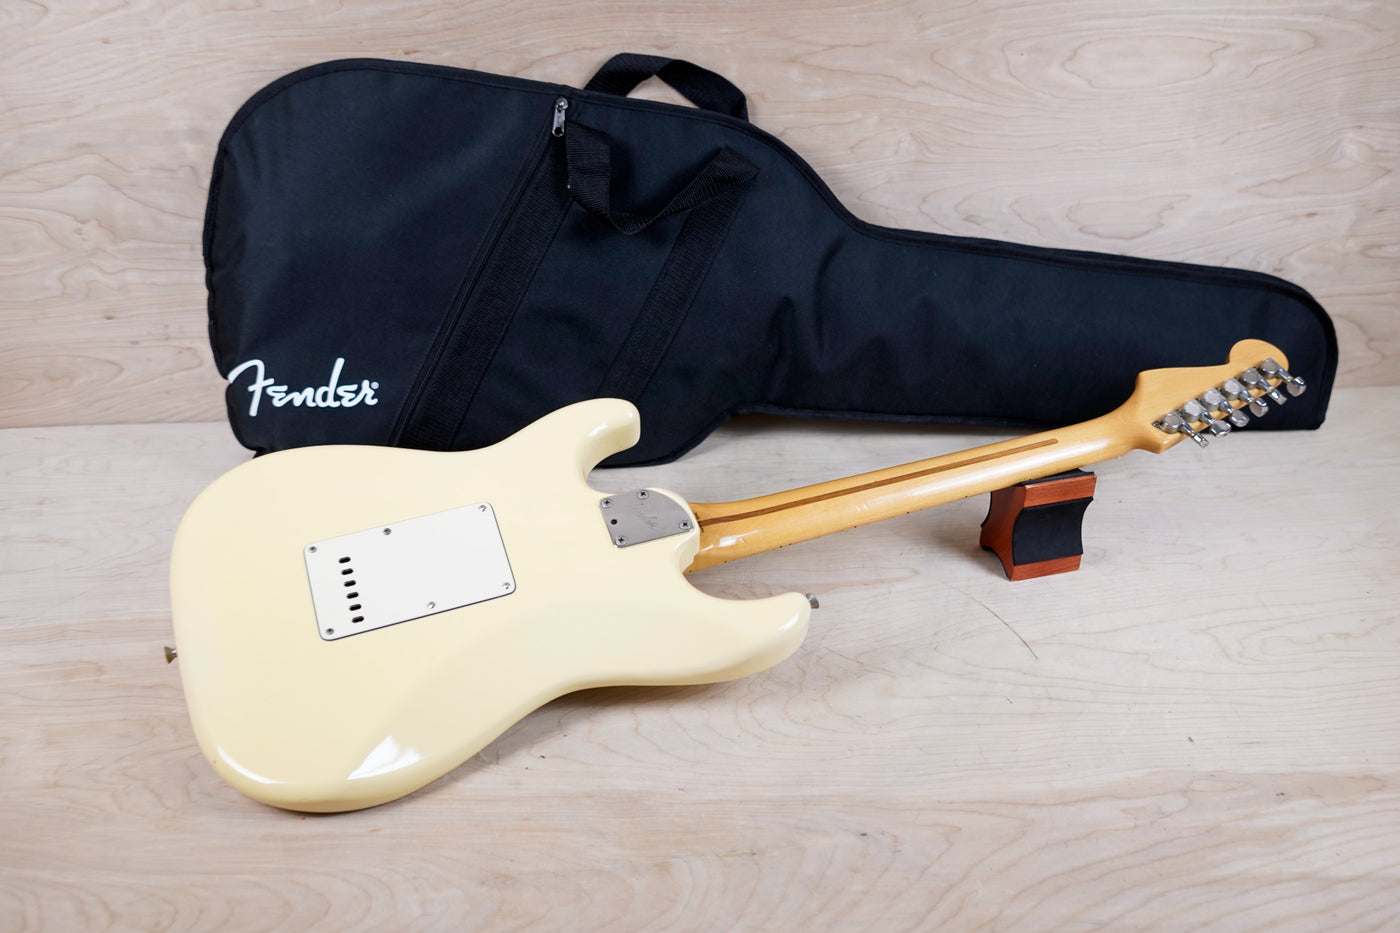 Fender STM-75DM MIJ 1988 Vintage White Medium Scale Stratocaster Made in Japan w/ Bag